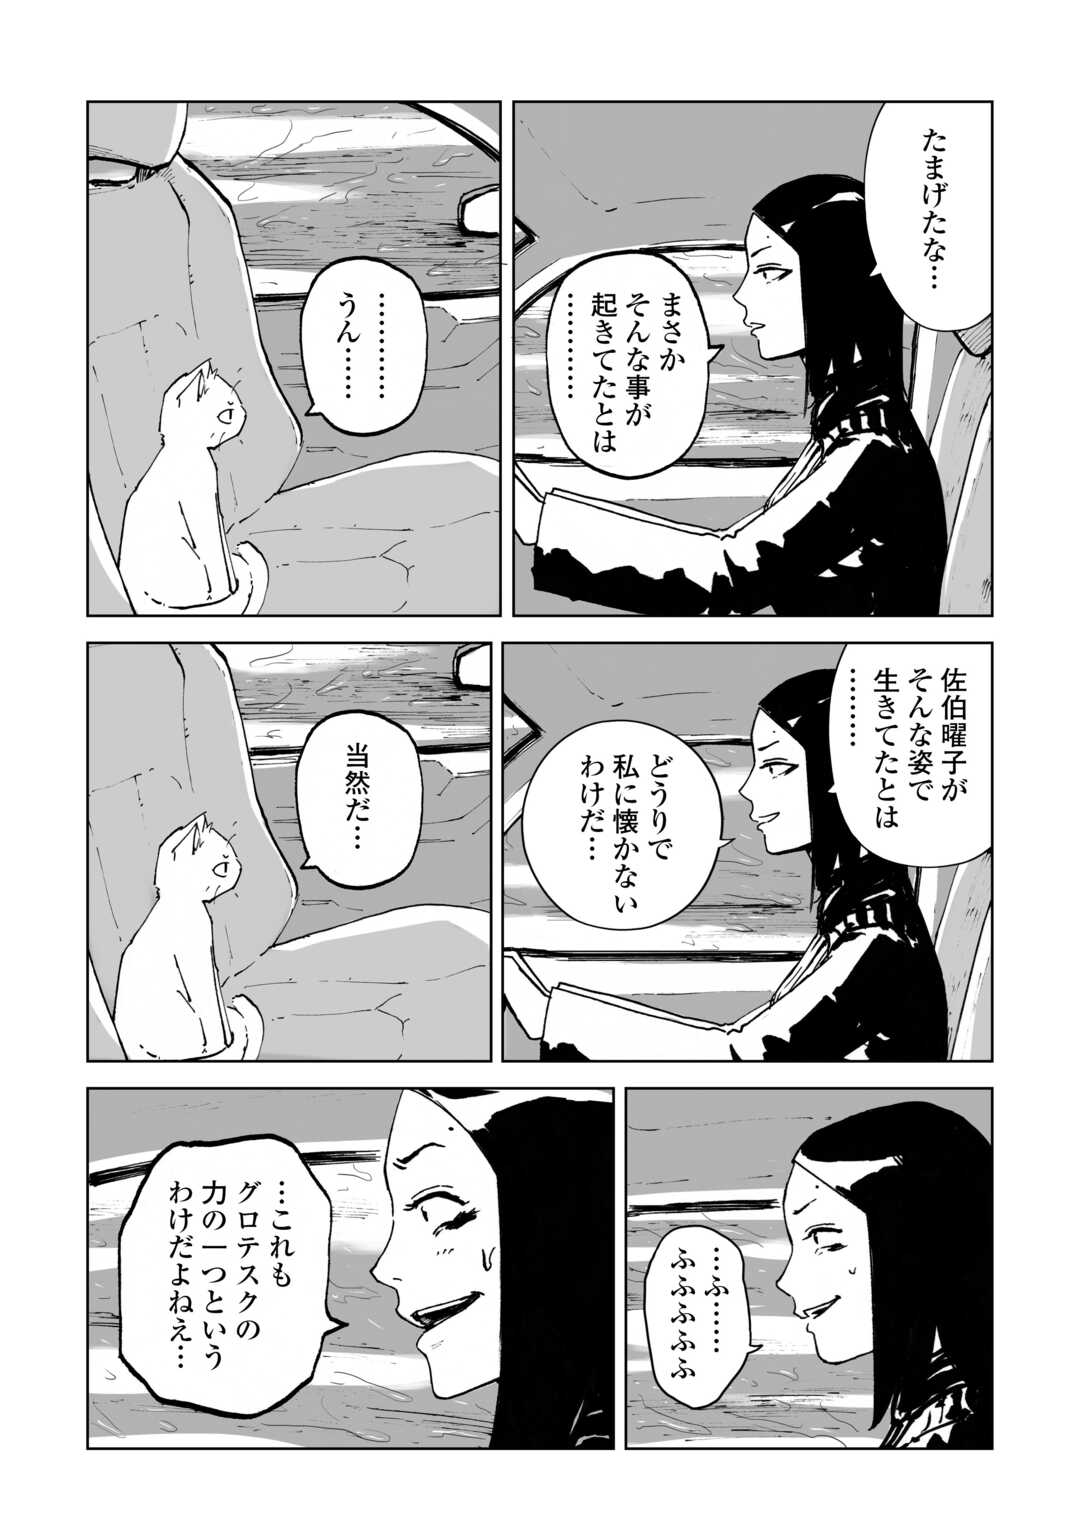 Kuro no Grotesque - Chapter 8 - Page 2